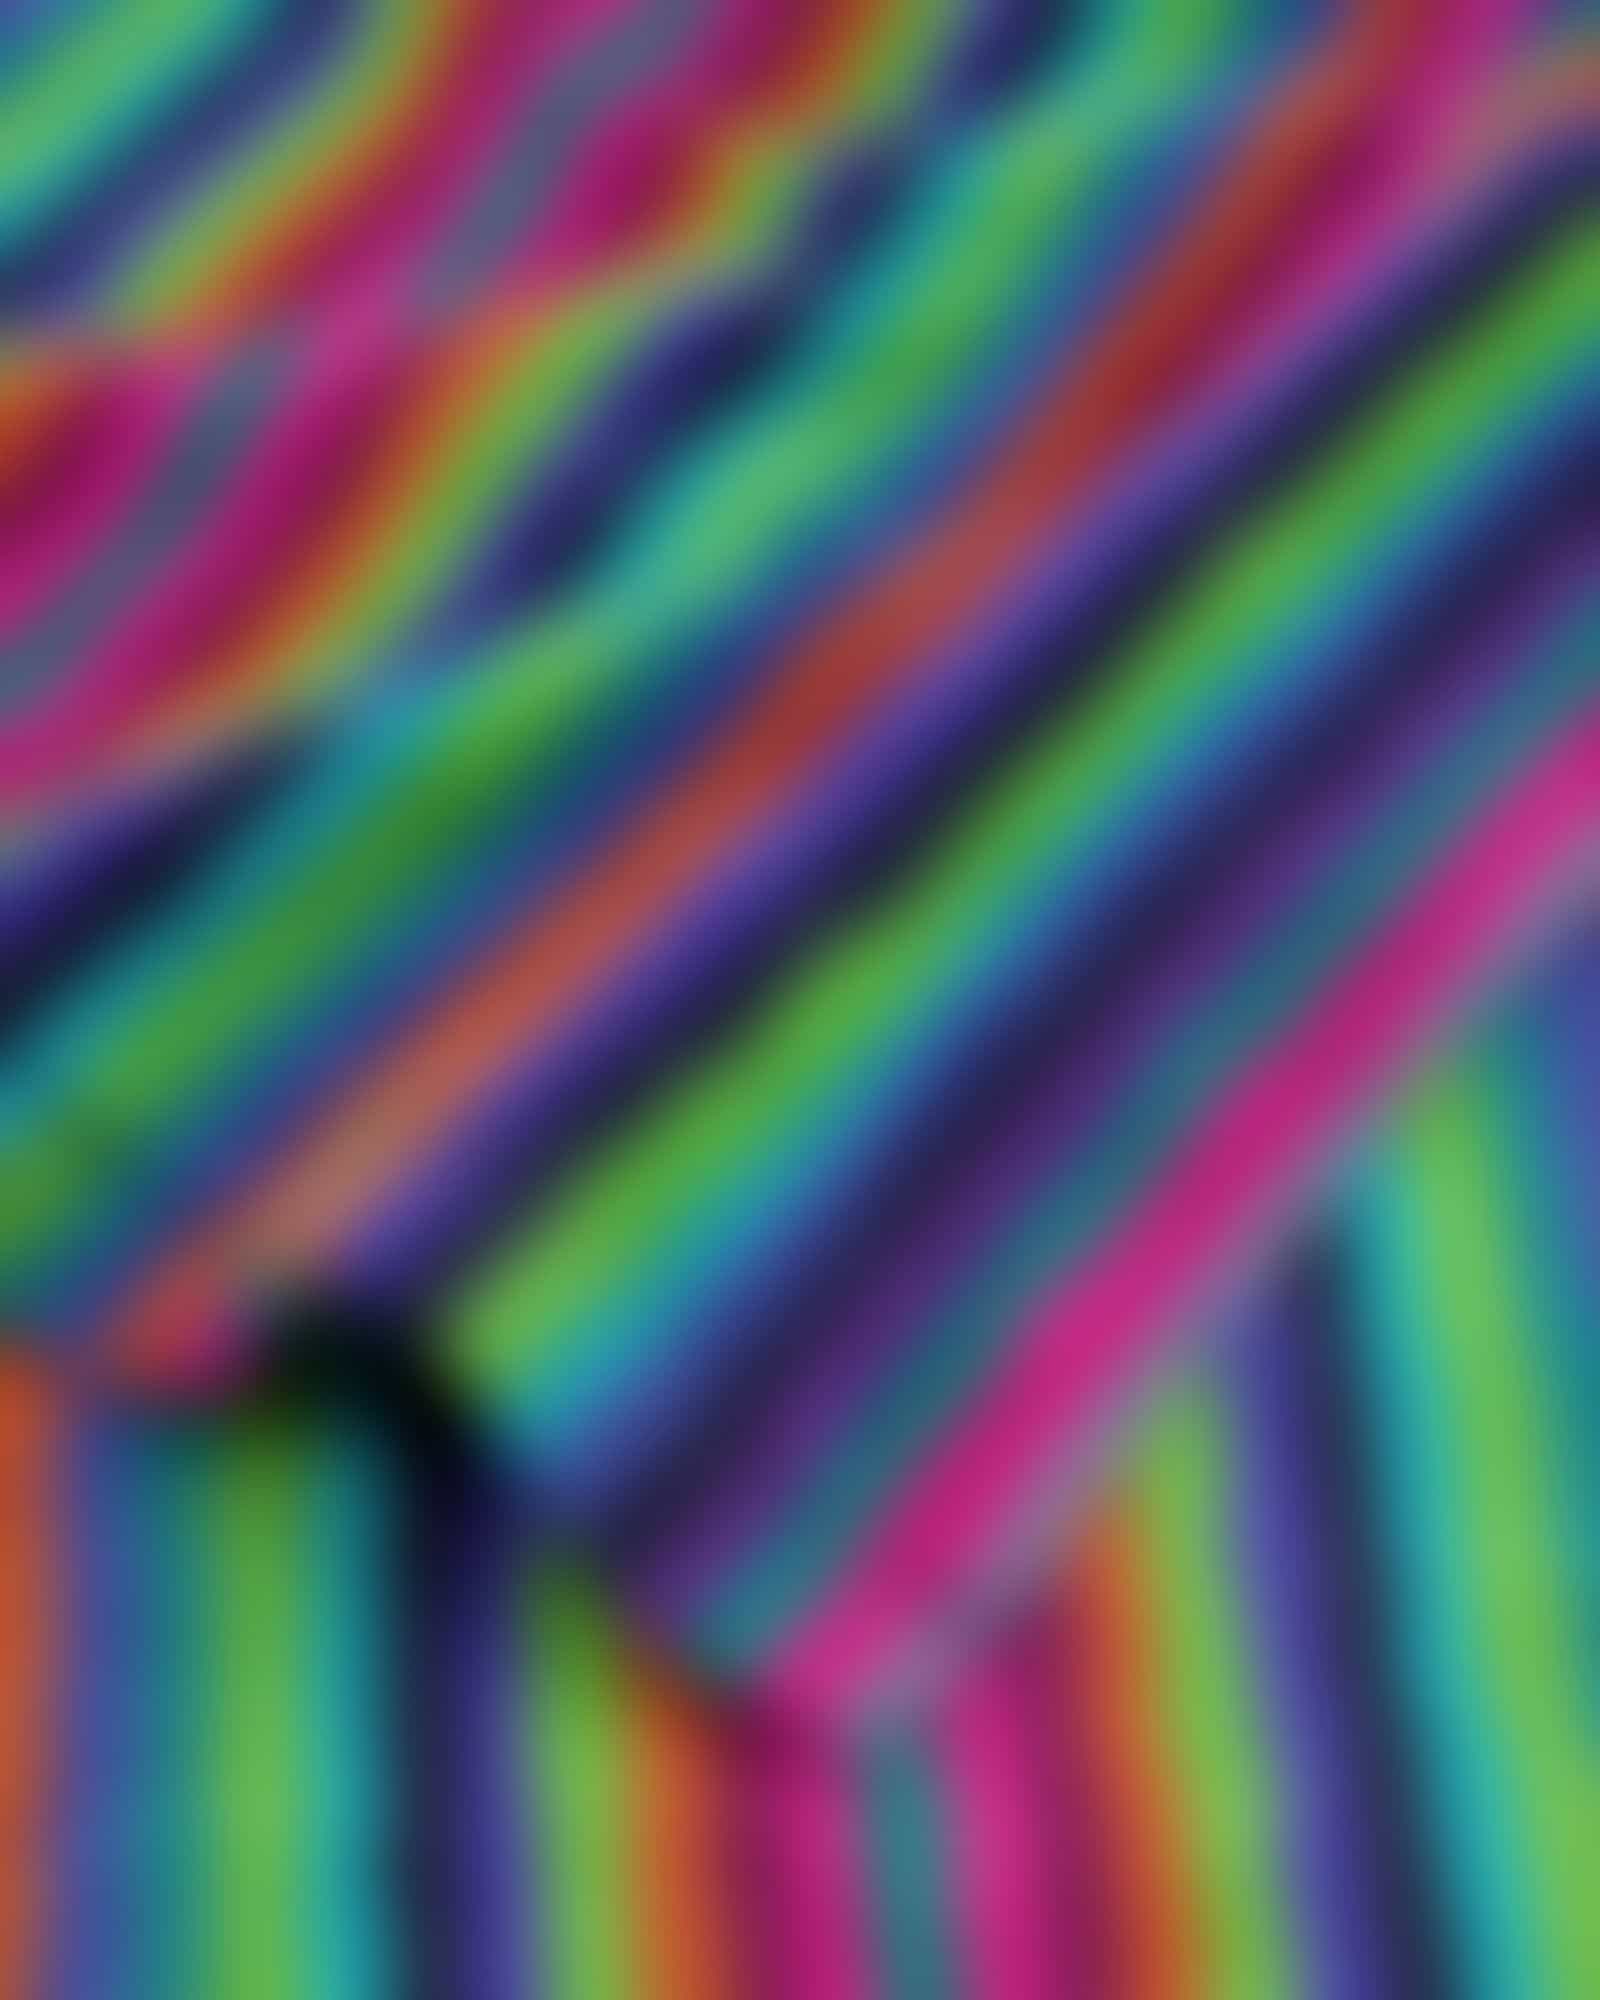 Cawö - Life Style Streifen 7048 - Farbe: 84 - multicolor Waschhandschuh 16x22 cm